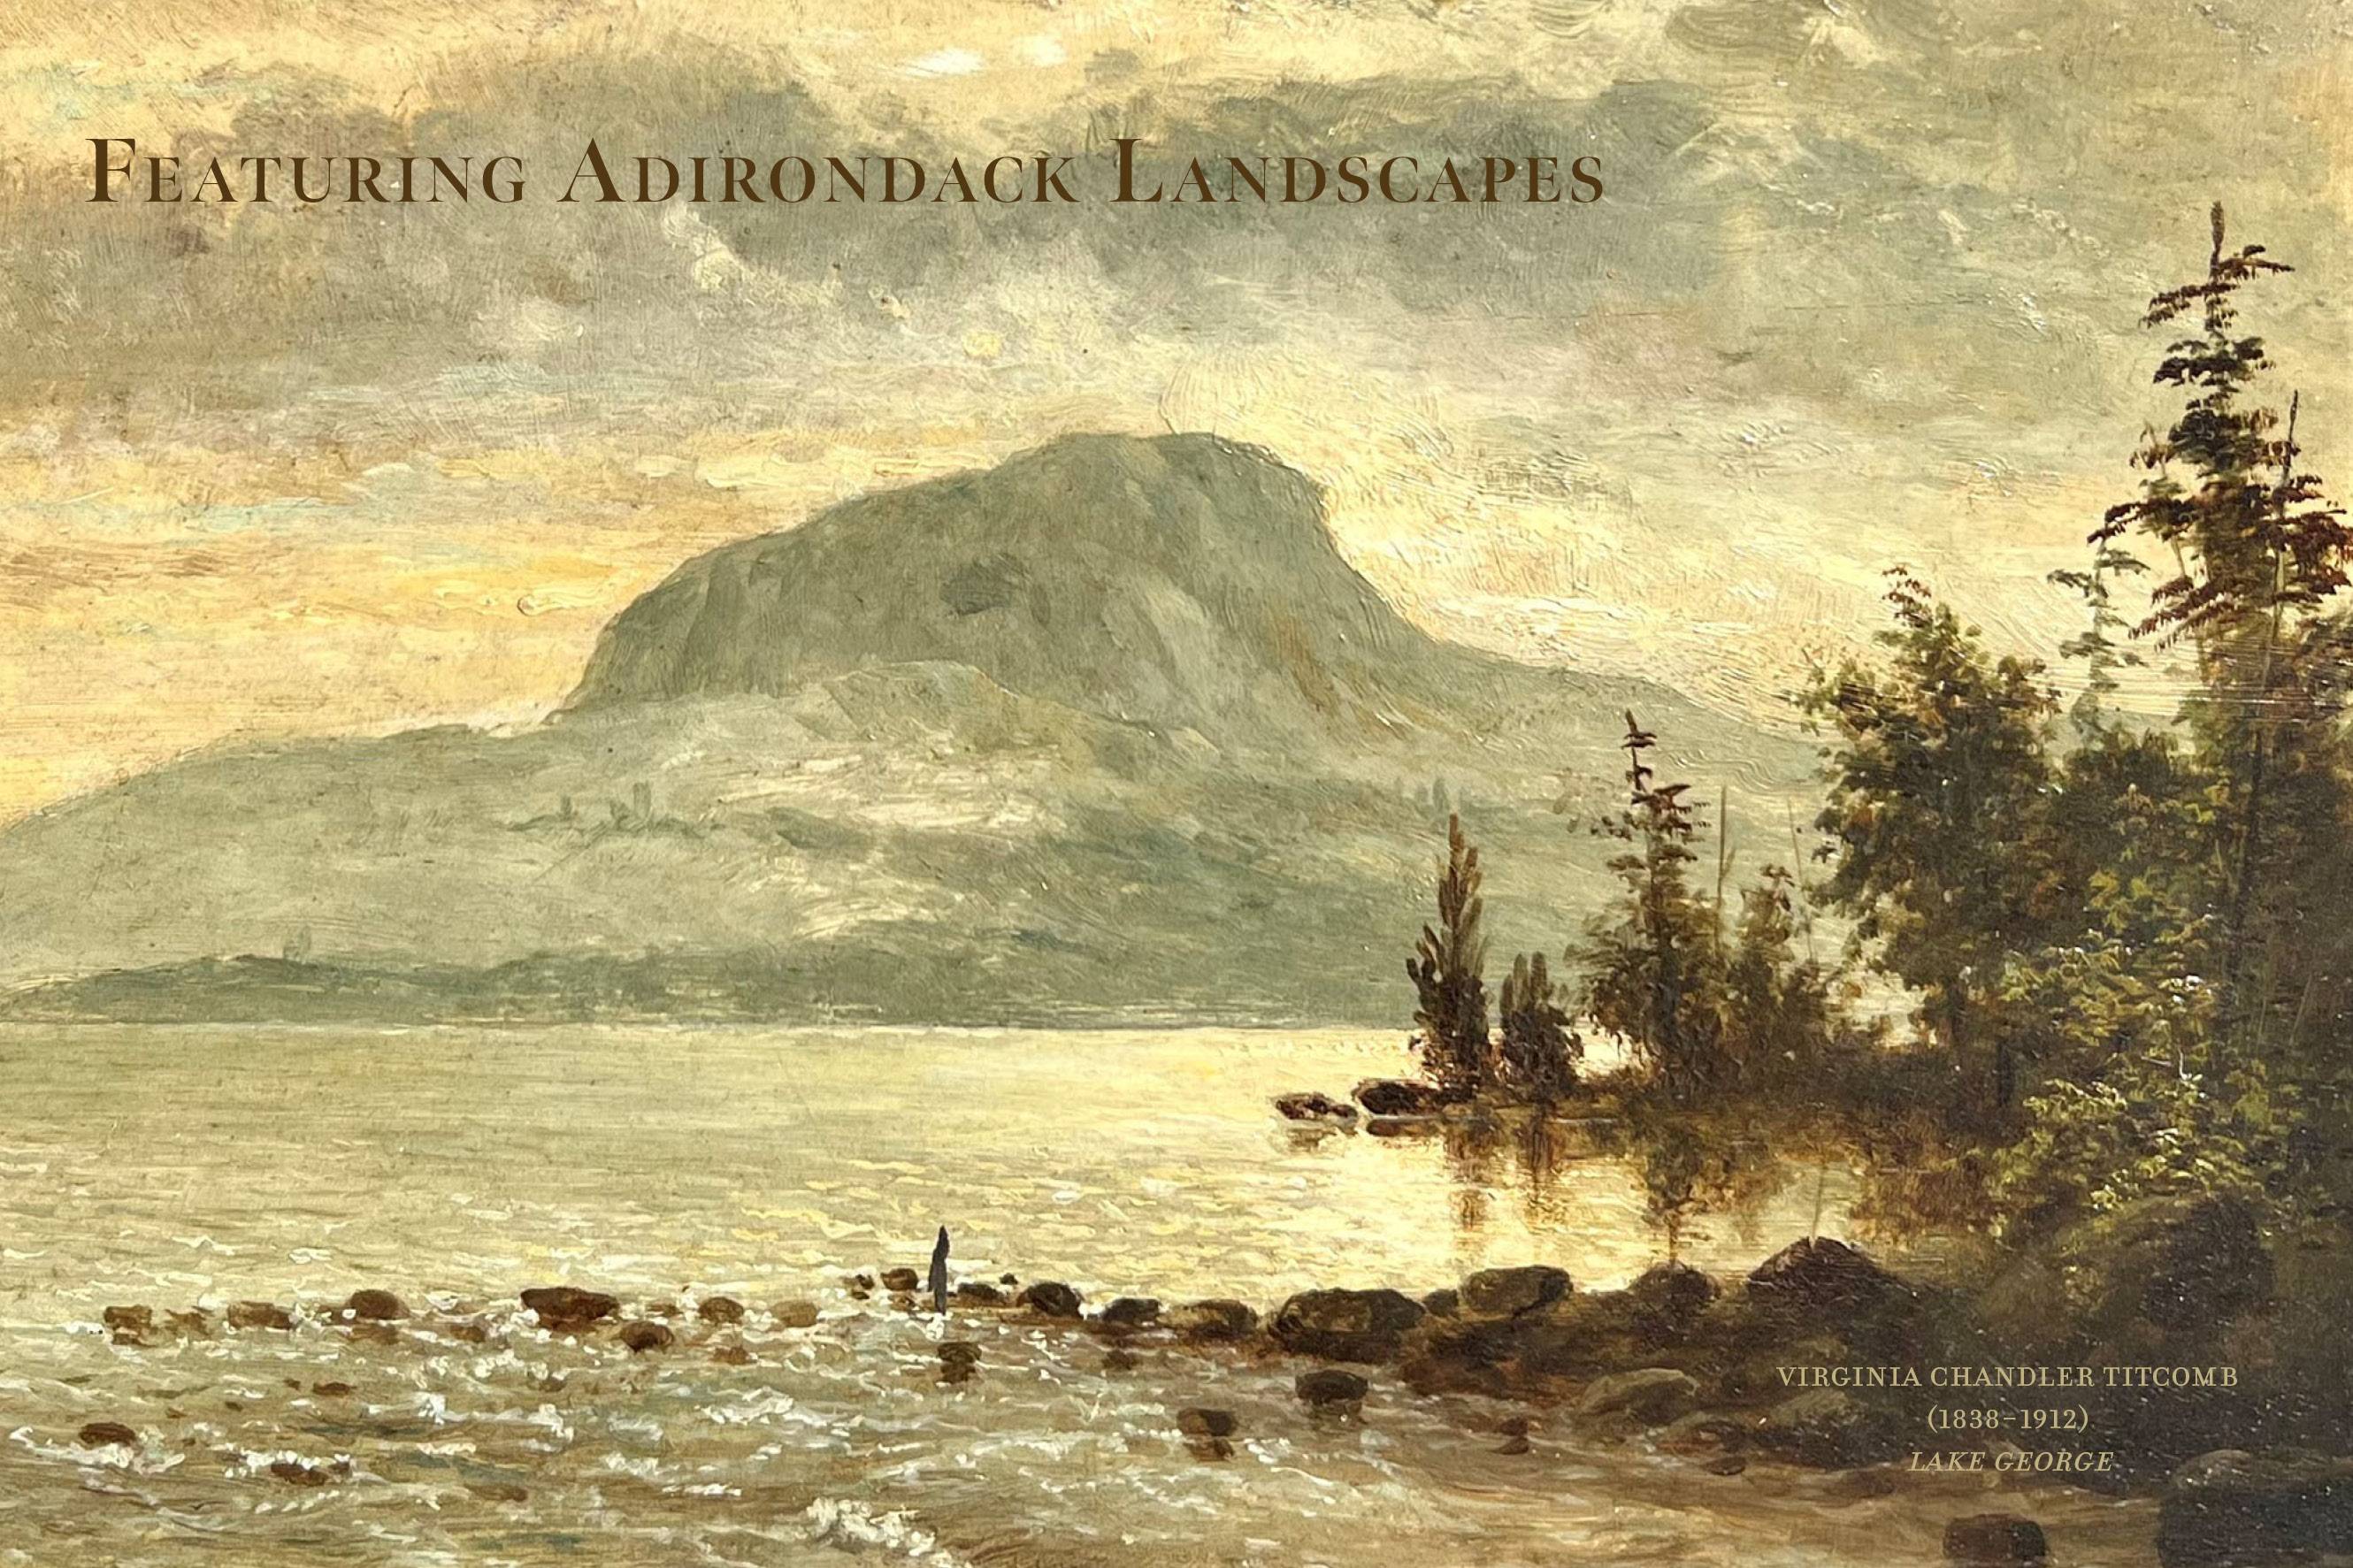 Featuring Adirondack Landscapes